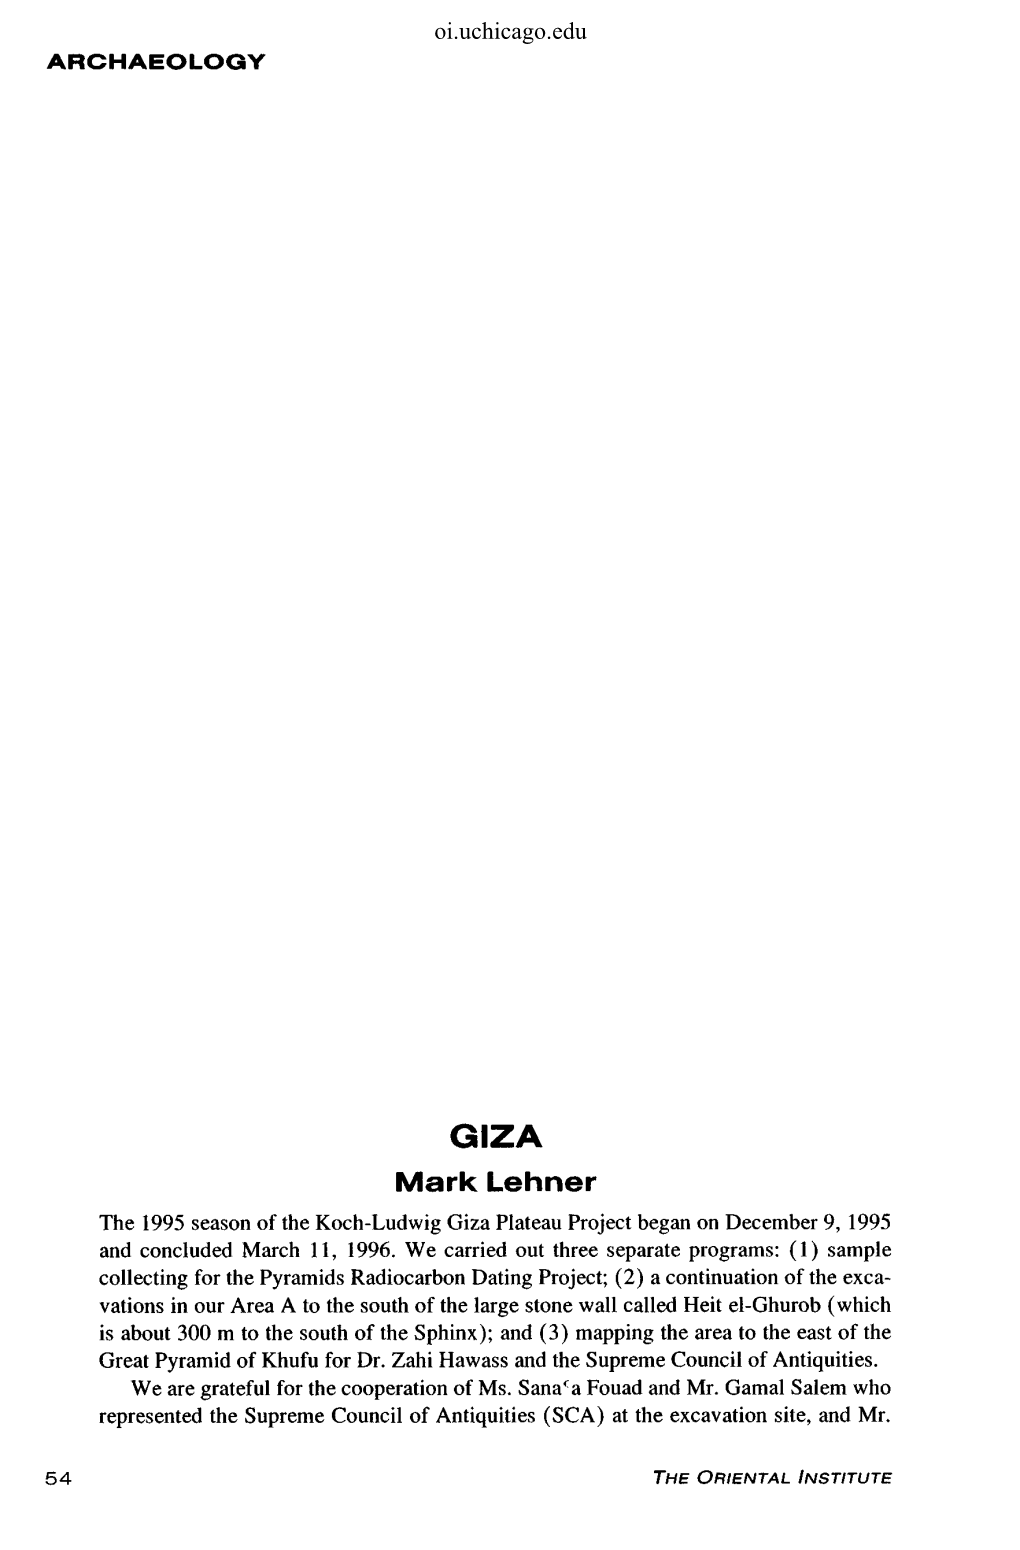 GIZA. Mark Lehner